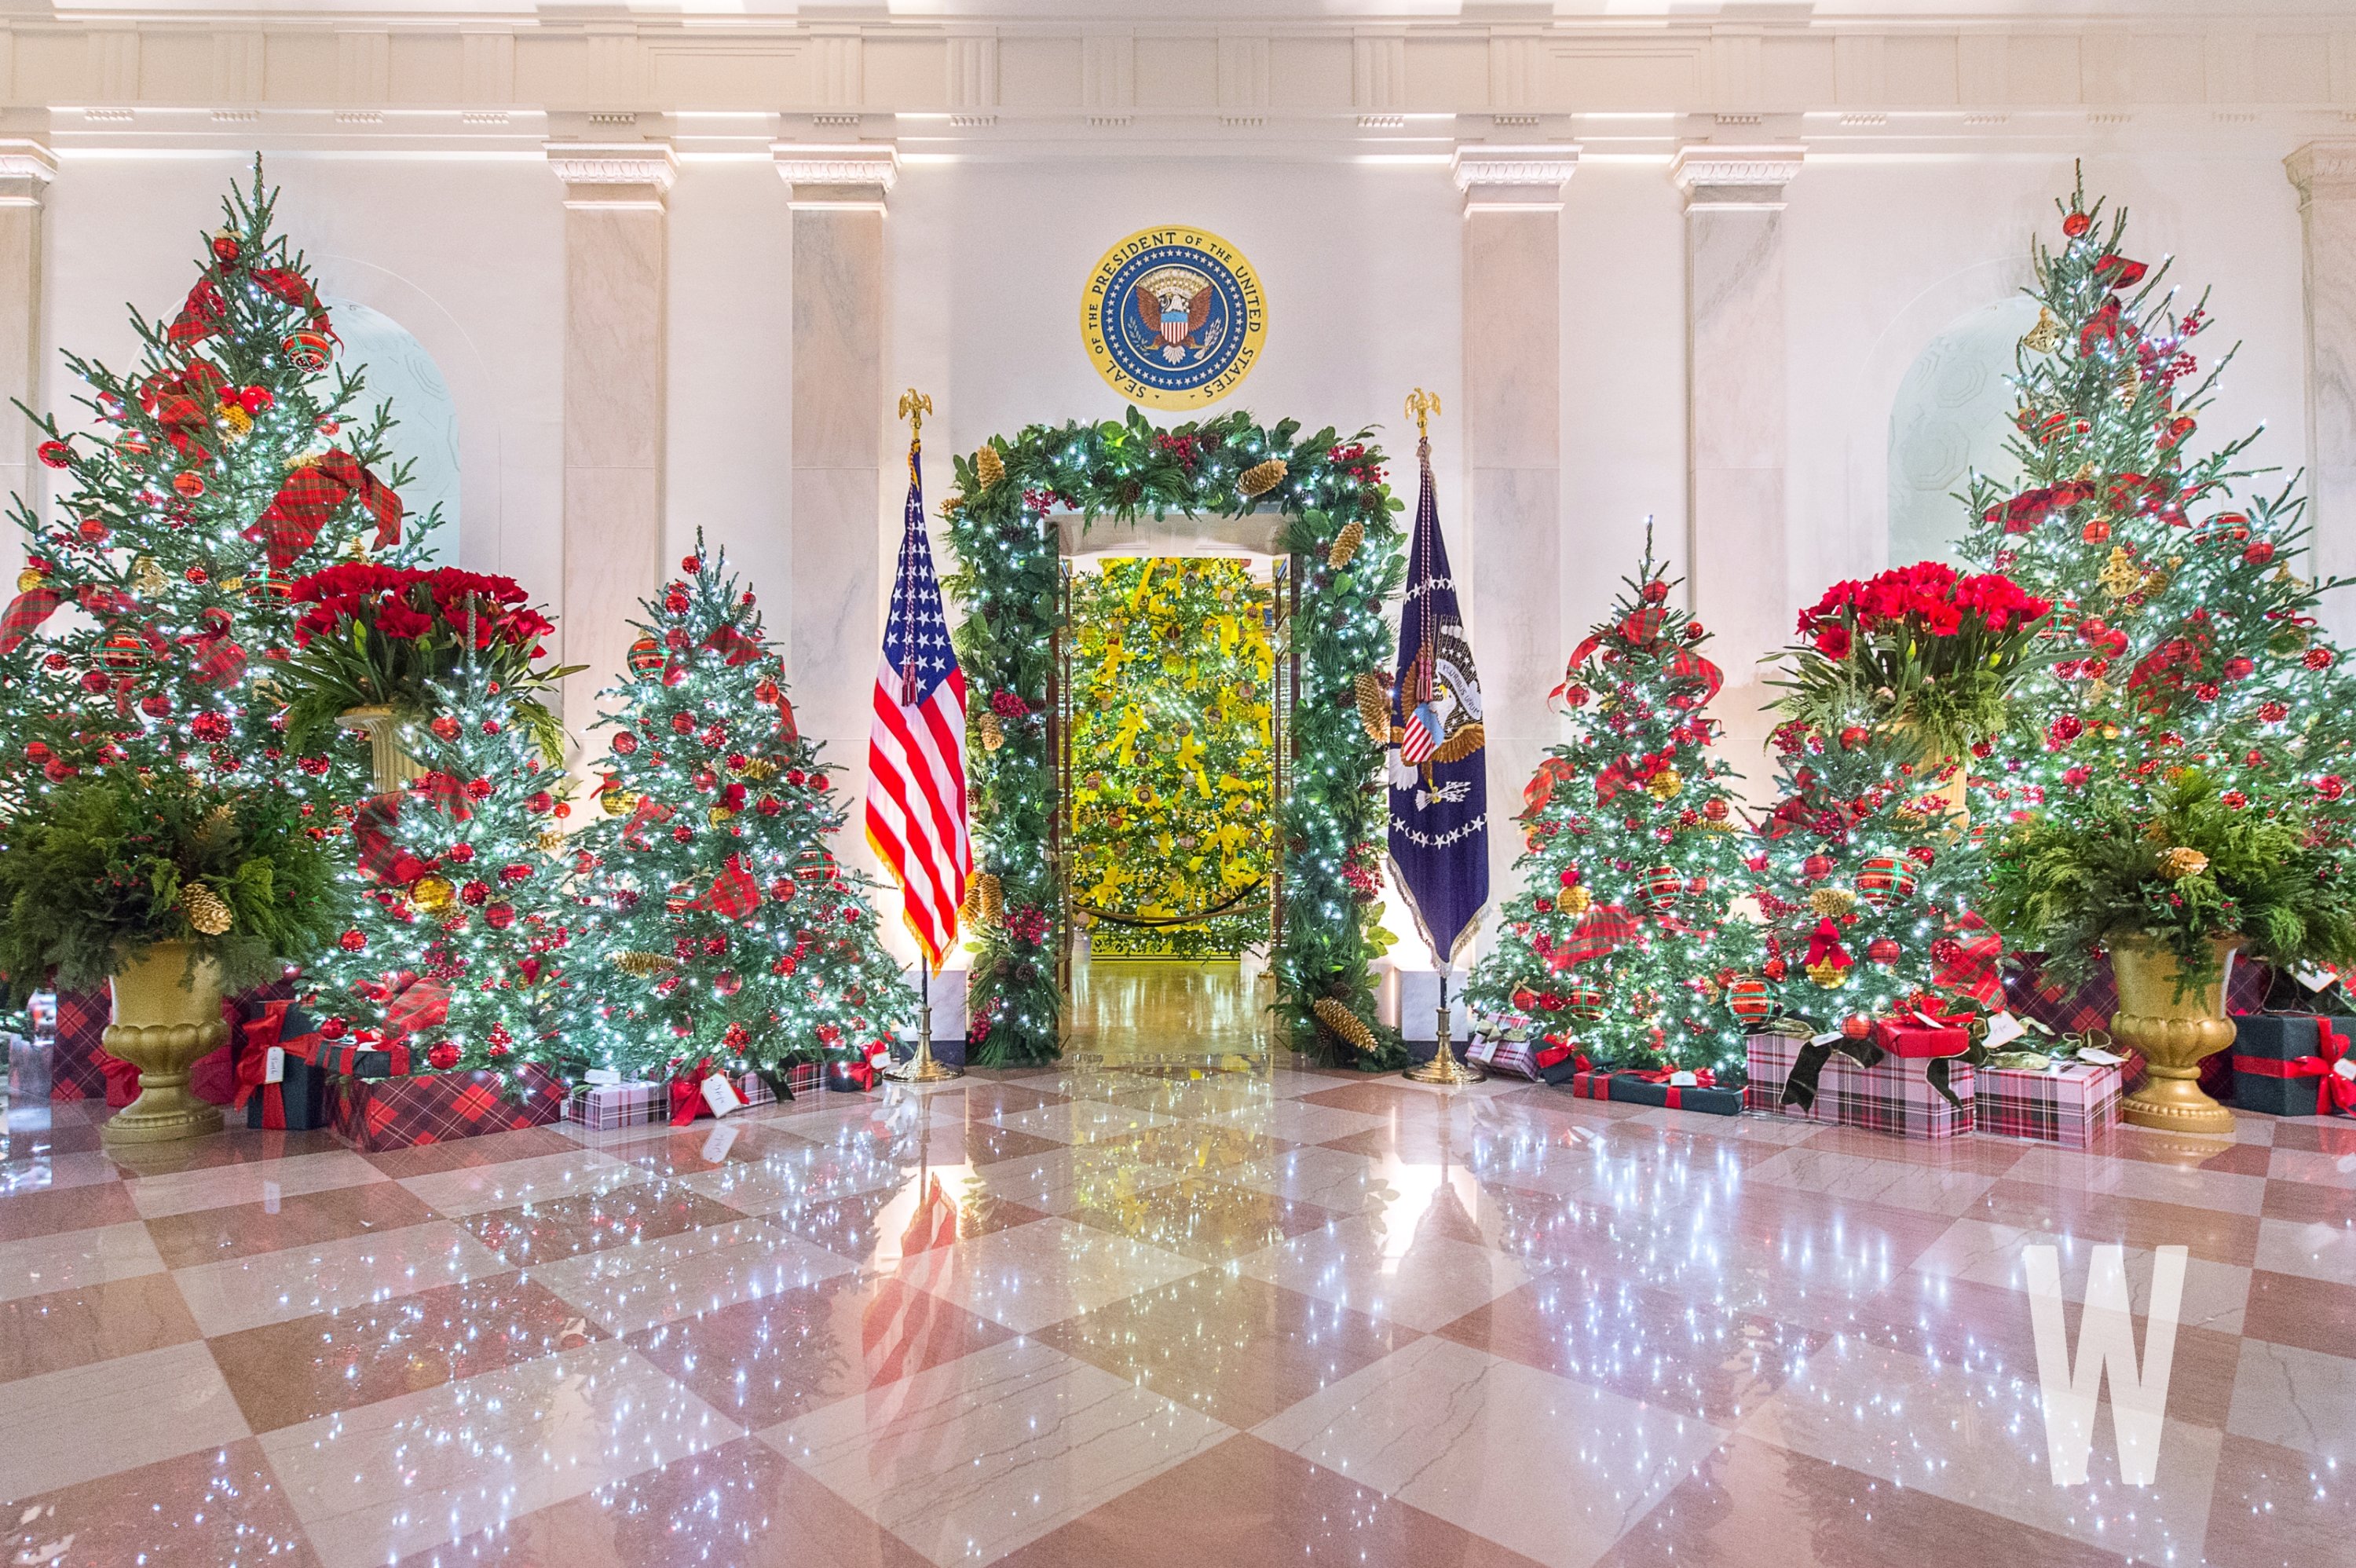 PHOTOS: The 2020 White House Christmas Decorations - Washingtonian